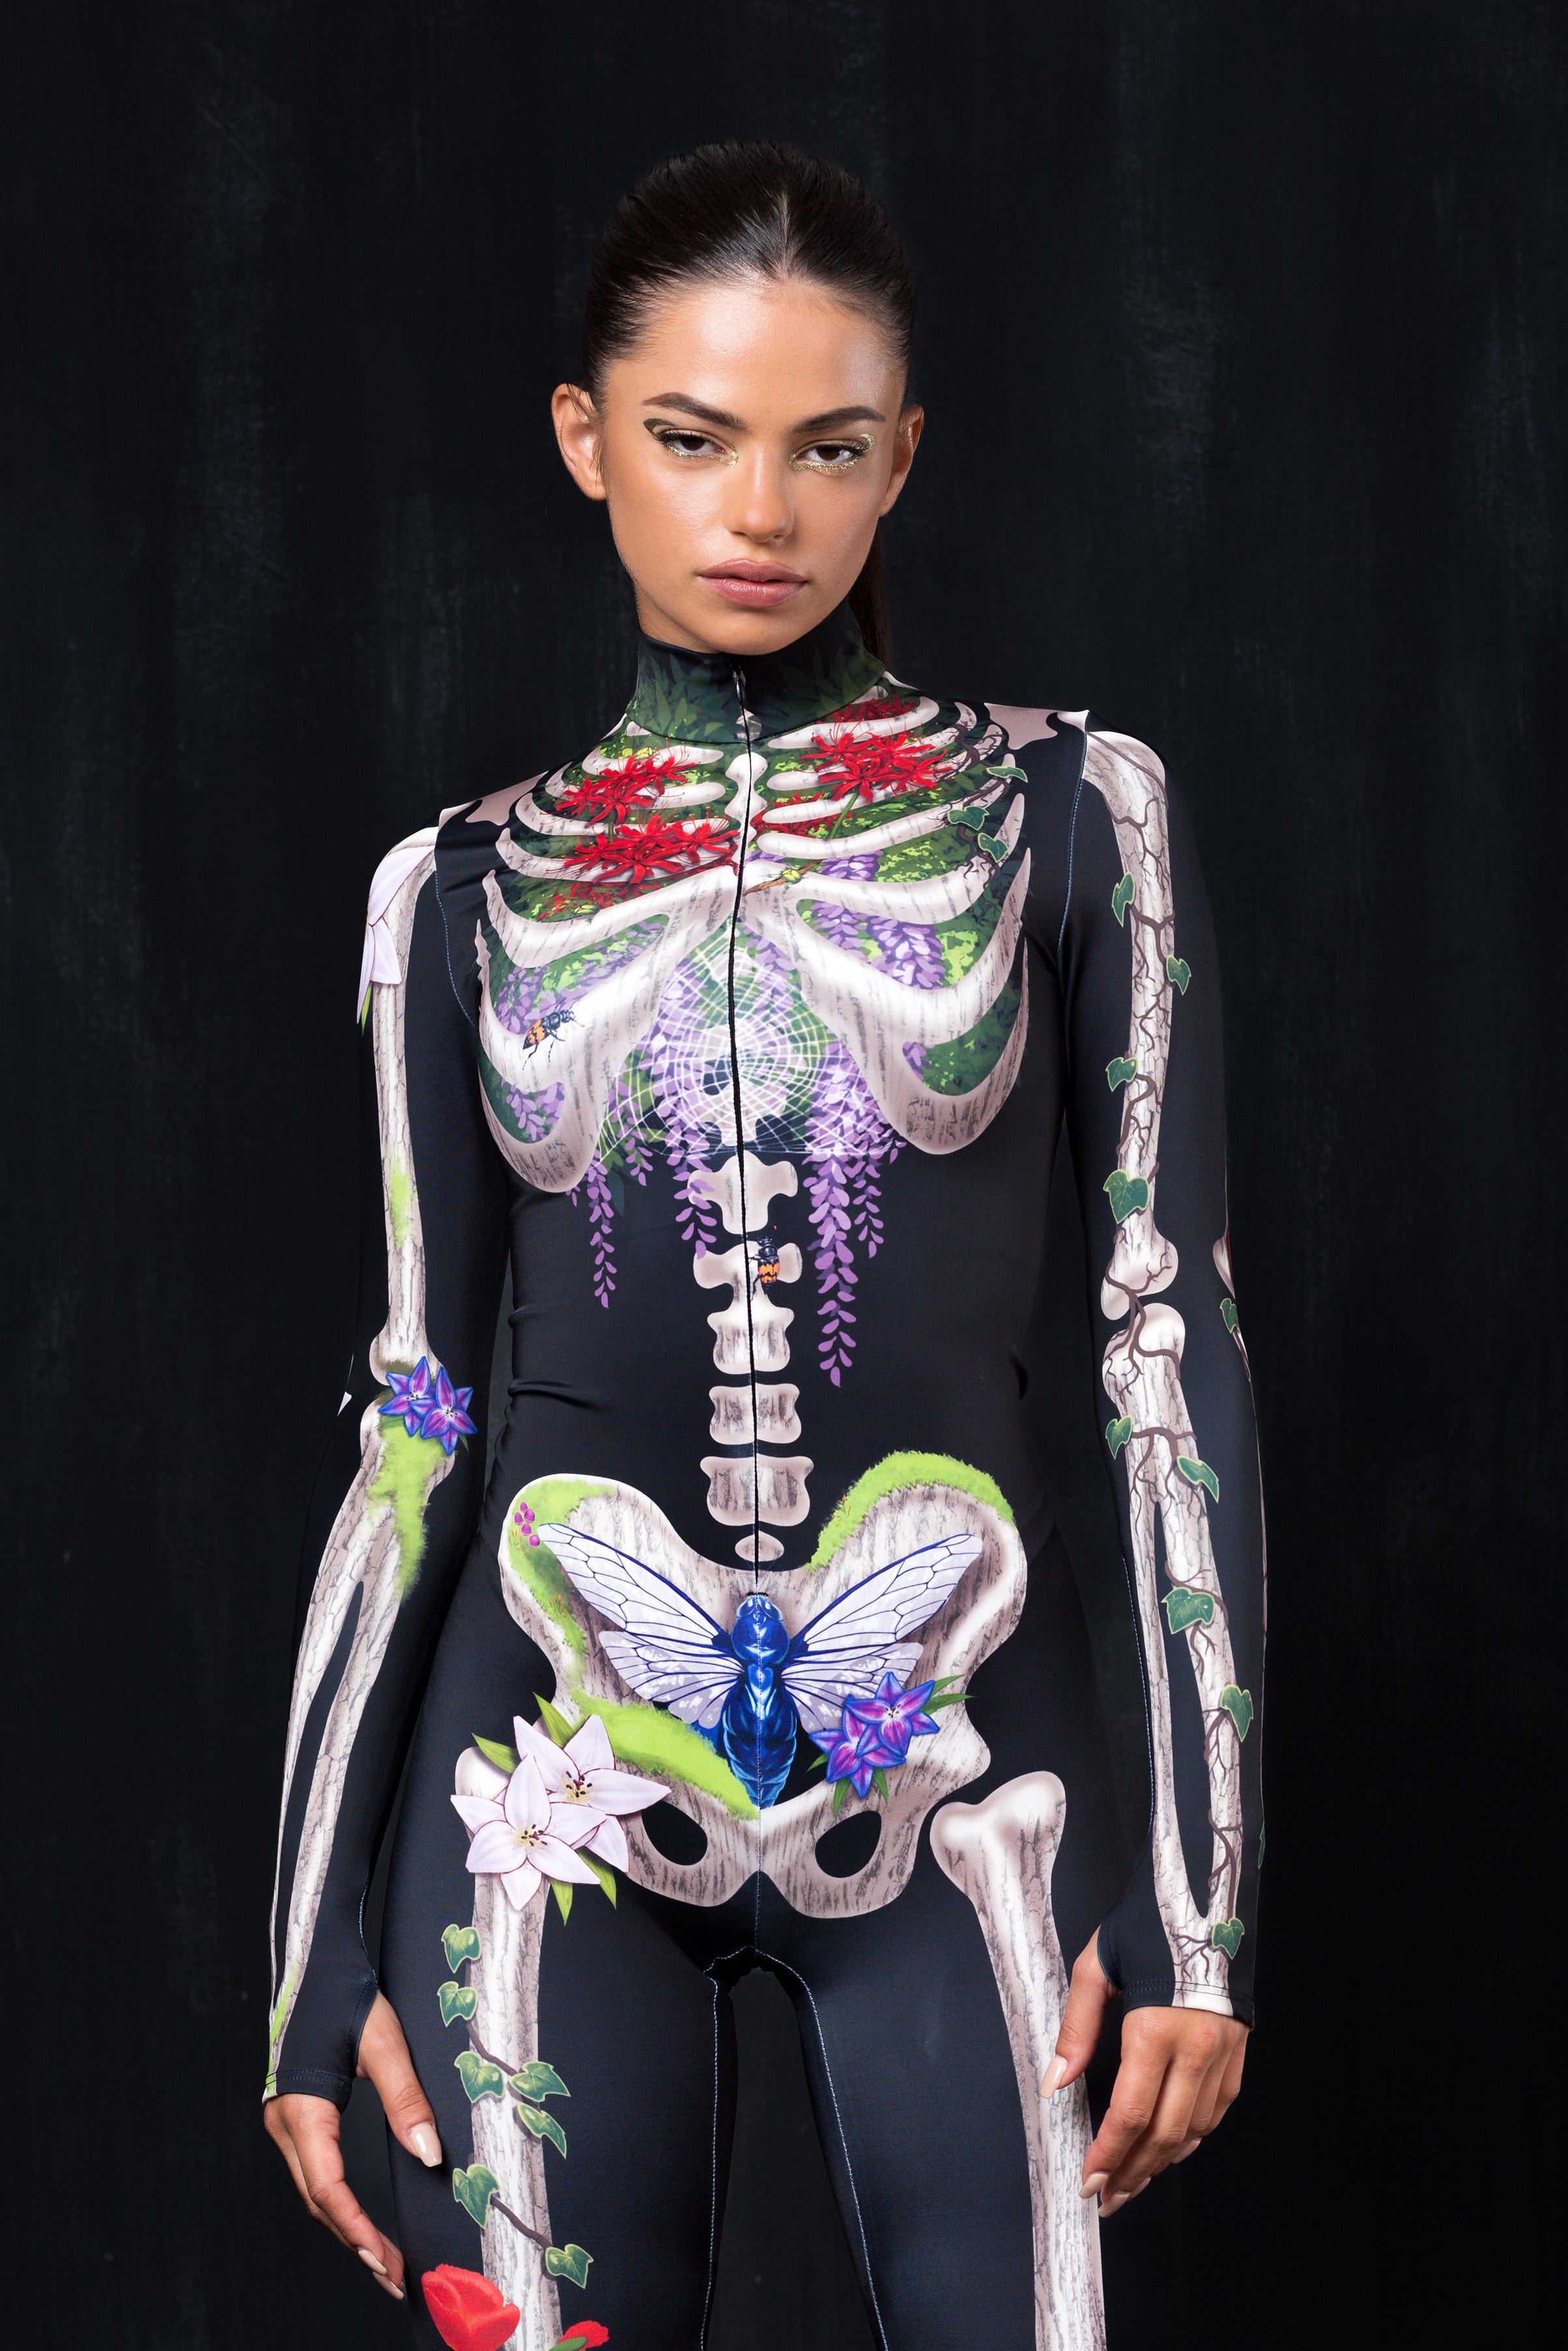 Earth Skeleton Costume